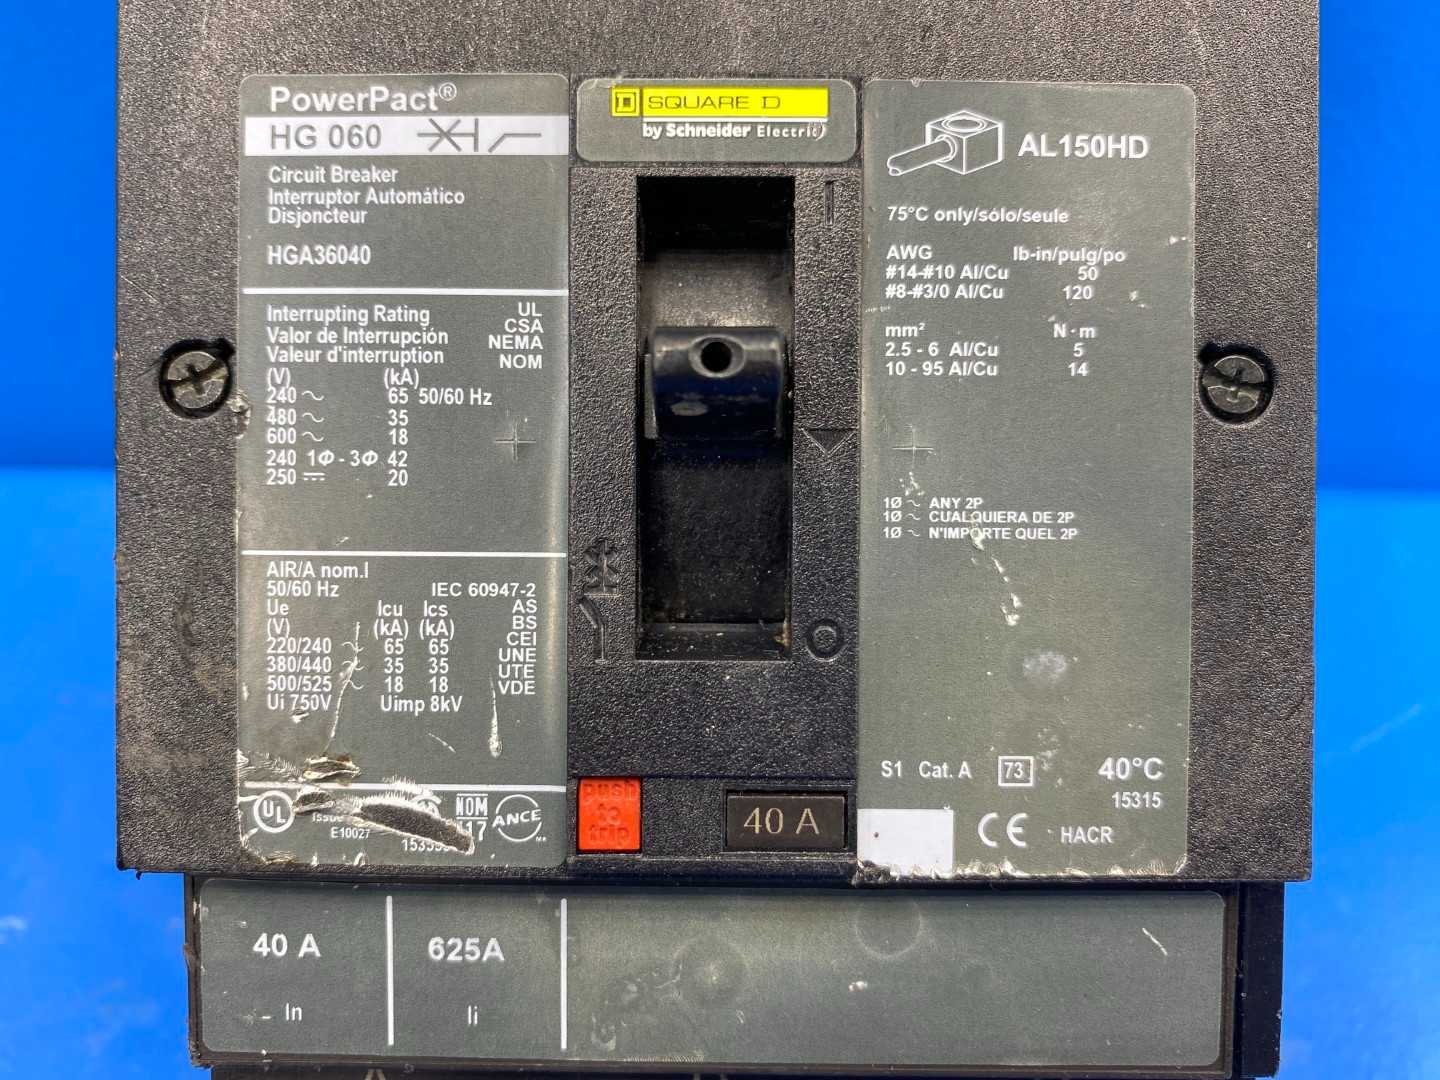 Square D Powerpact Circuit Breaker HG 060 HGA36040